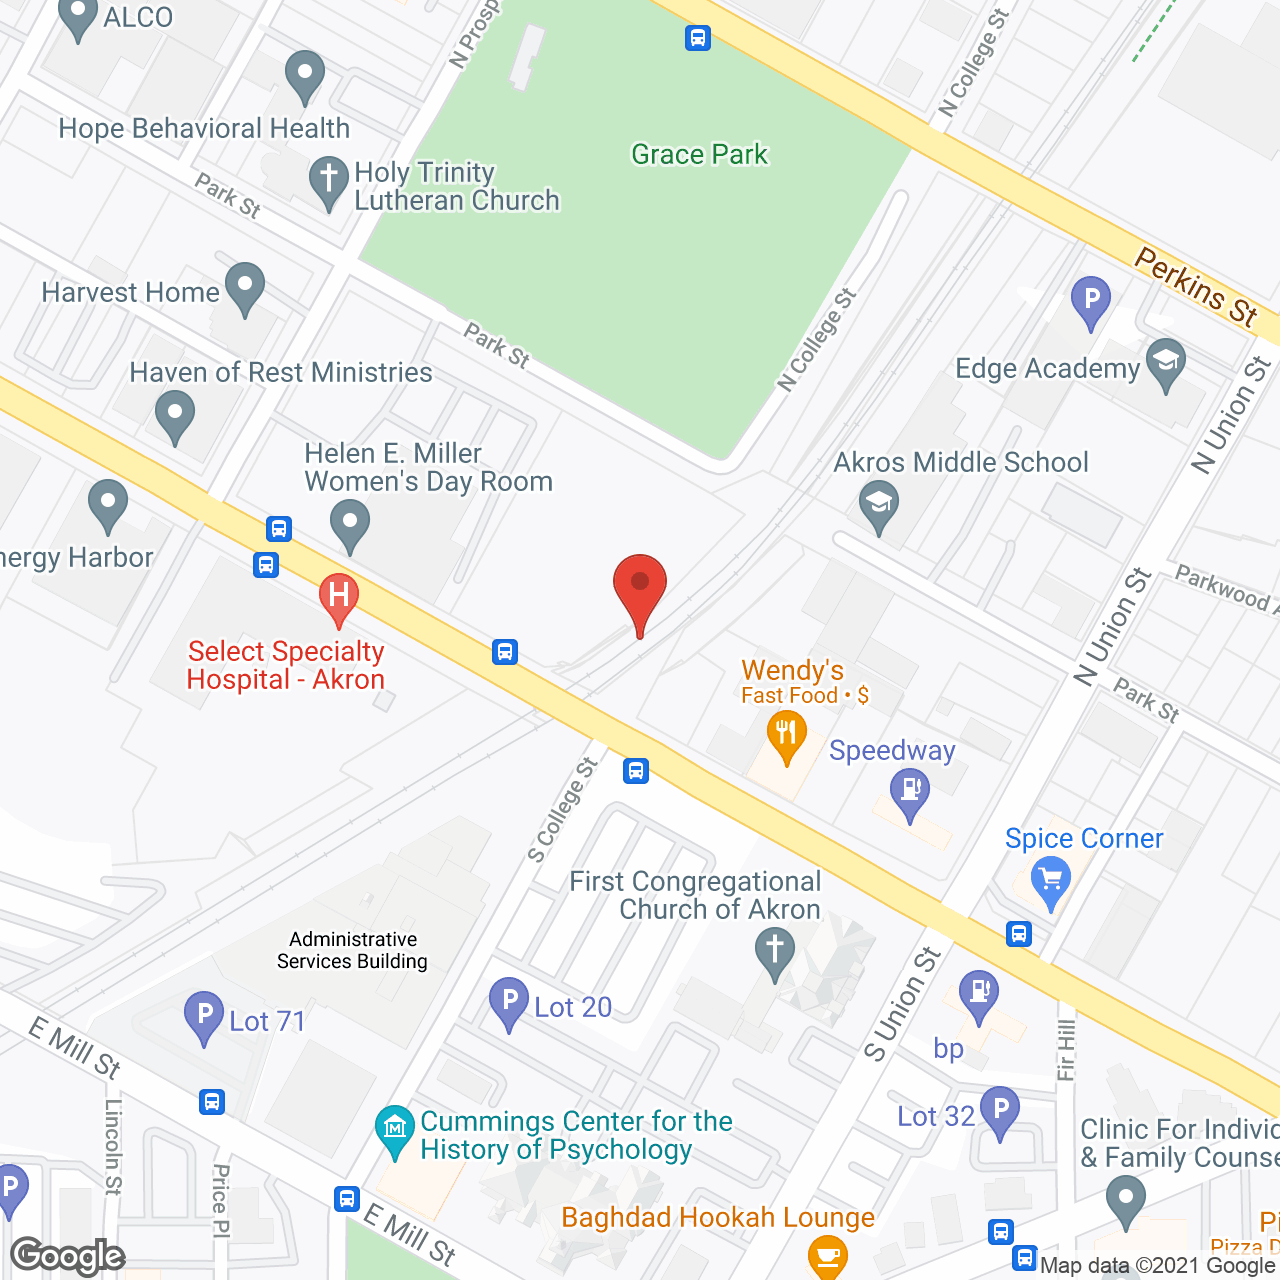 Summa Rehabilitation Services in google map